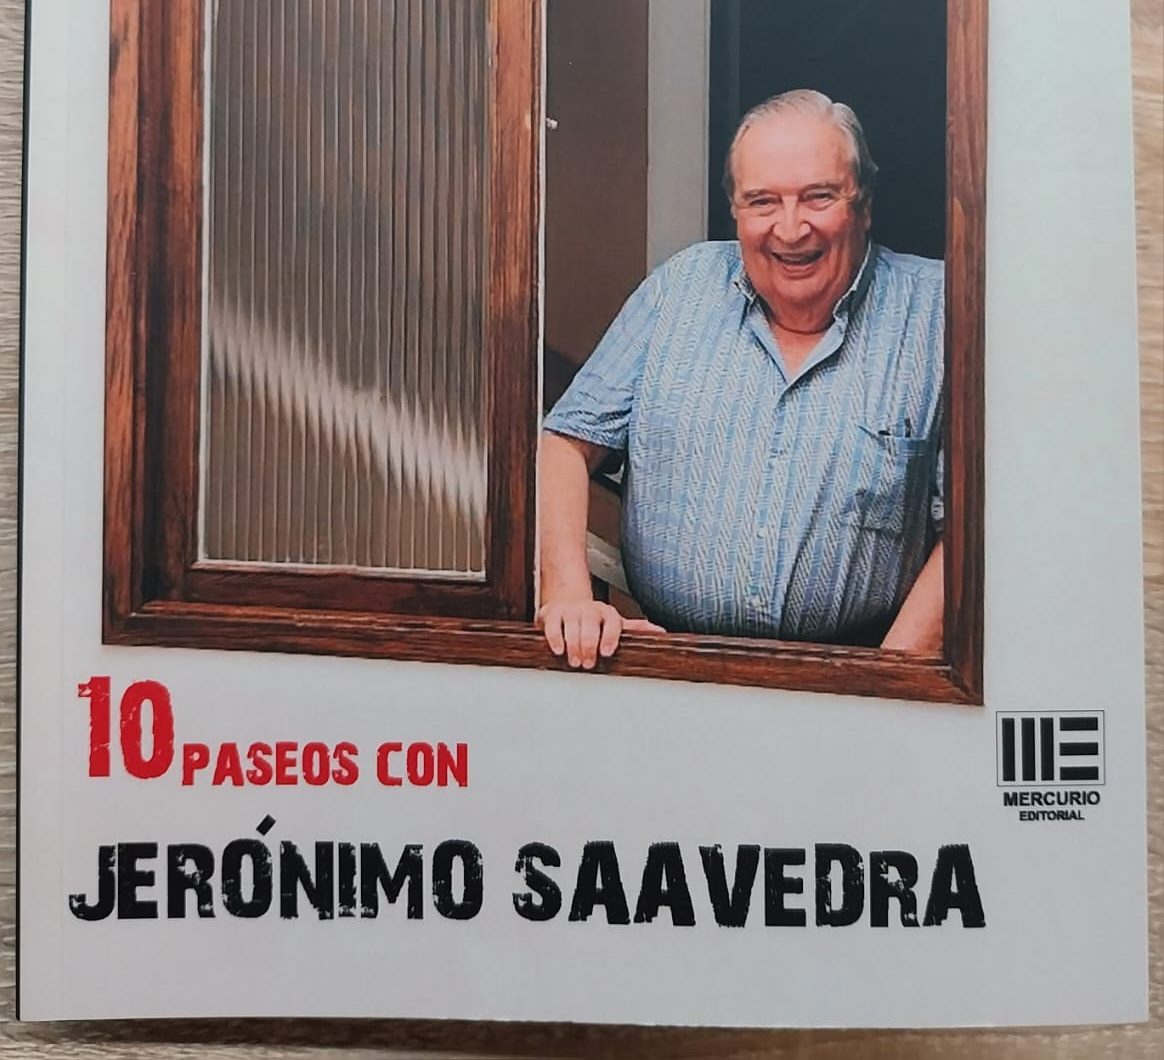 Visita de Don Jerónimo Saavedra Acevedo para presentar su libro "10 PASEOS CON JERÓNIMO SAAVEDRA".